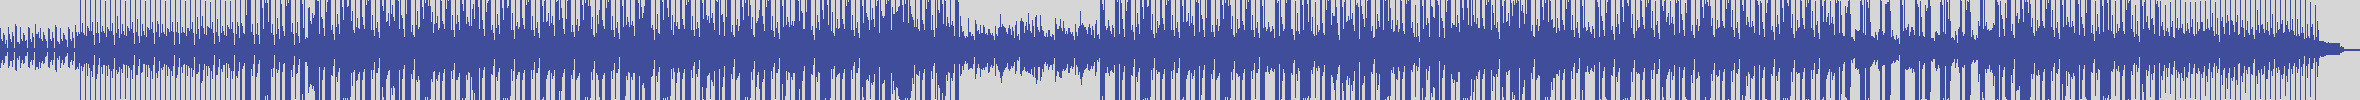 nf_boyz_records [NFY008] Dennis Shultz - World Like It [Krown & Pearls Mix] audio wave form